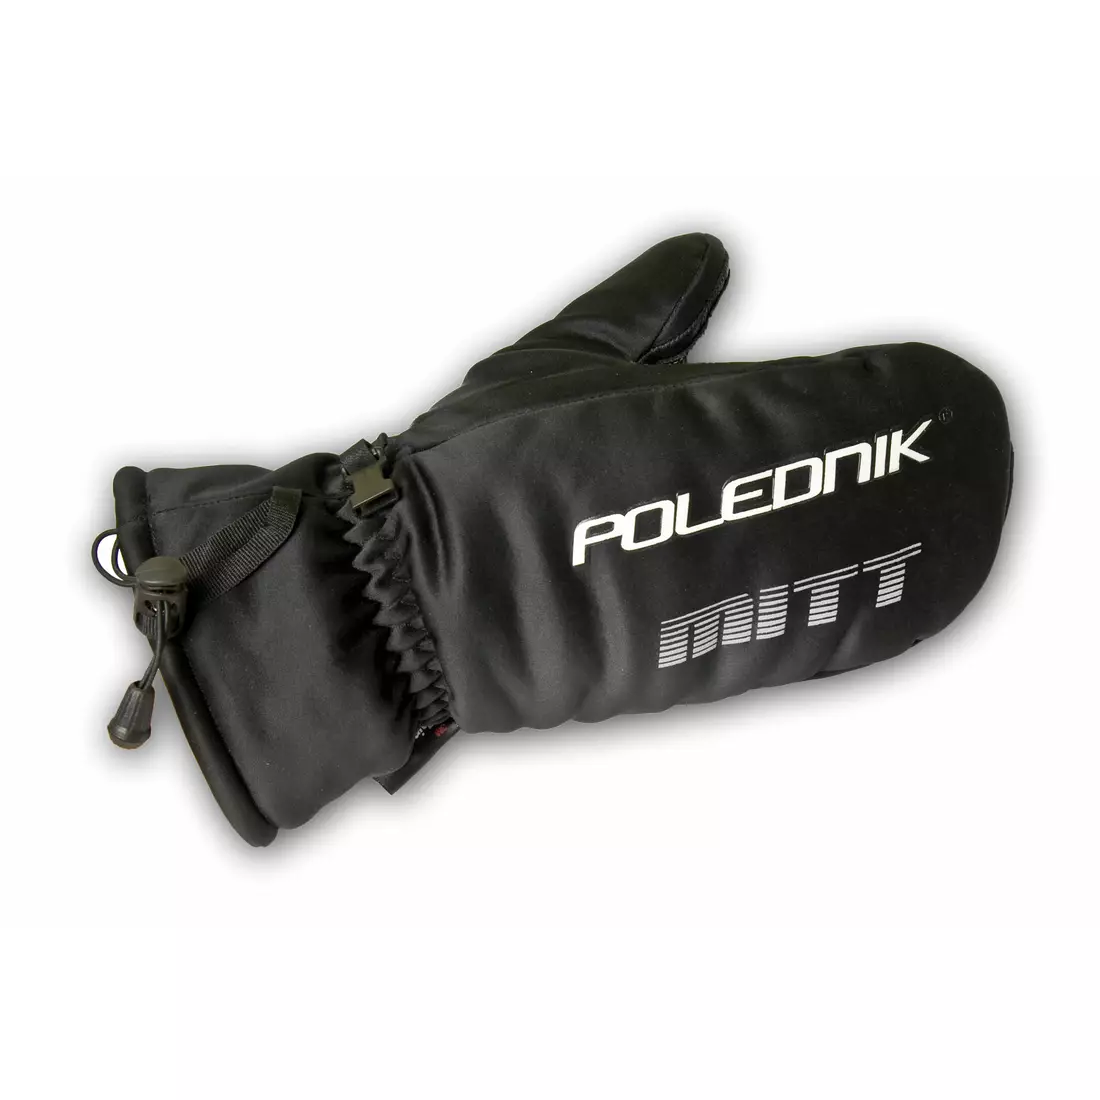 POLEDNIK zimné rukavice MITT, farba: čierna